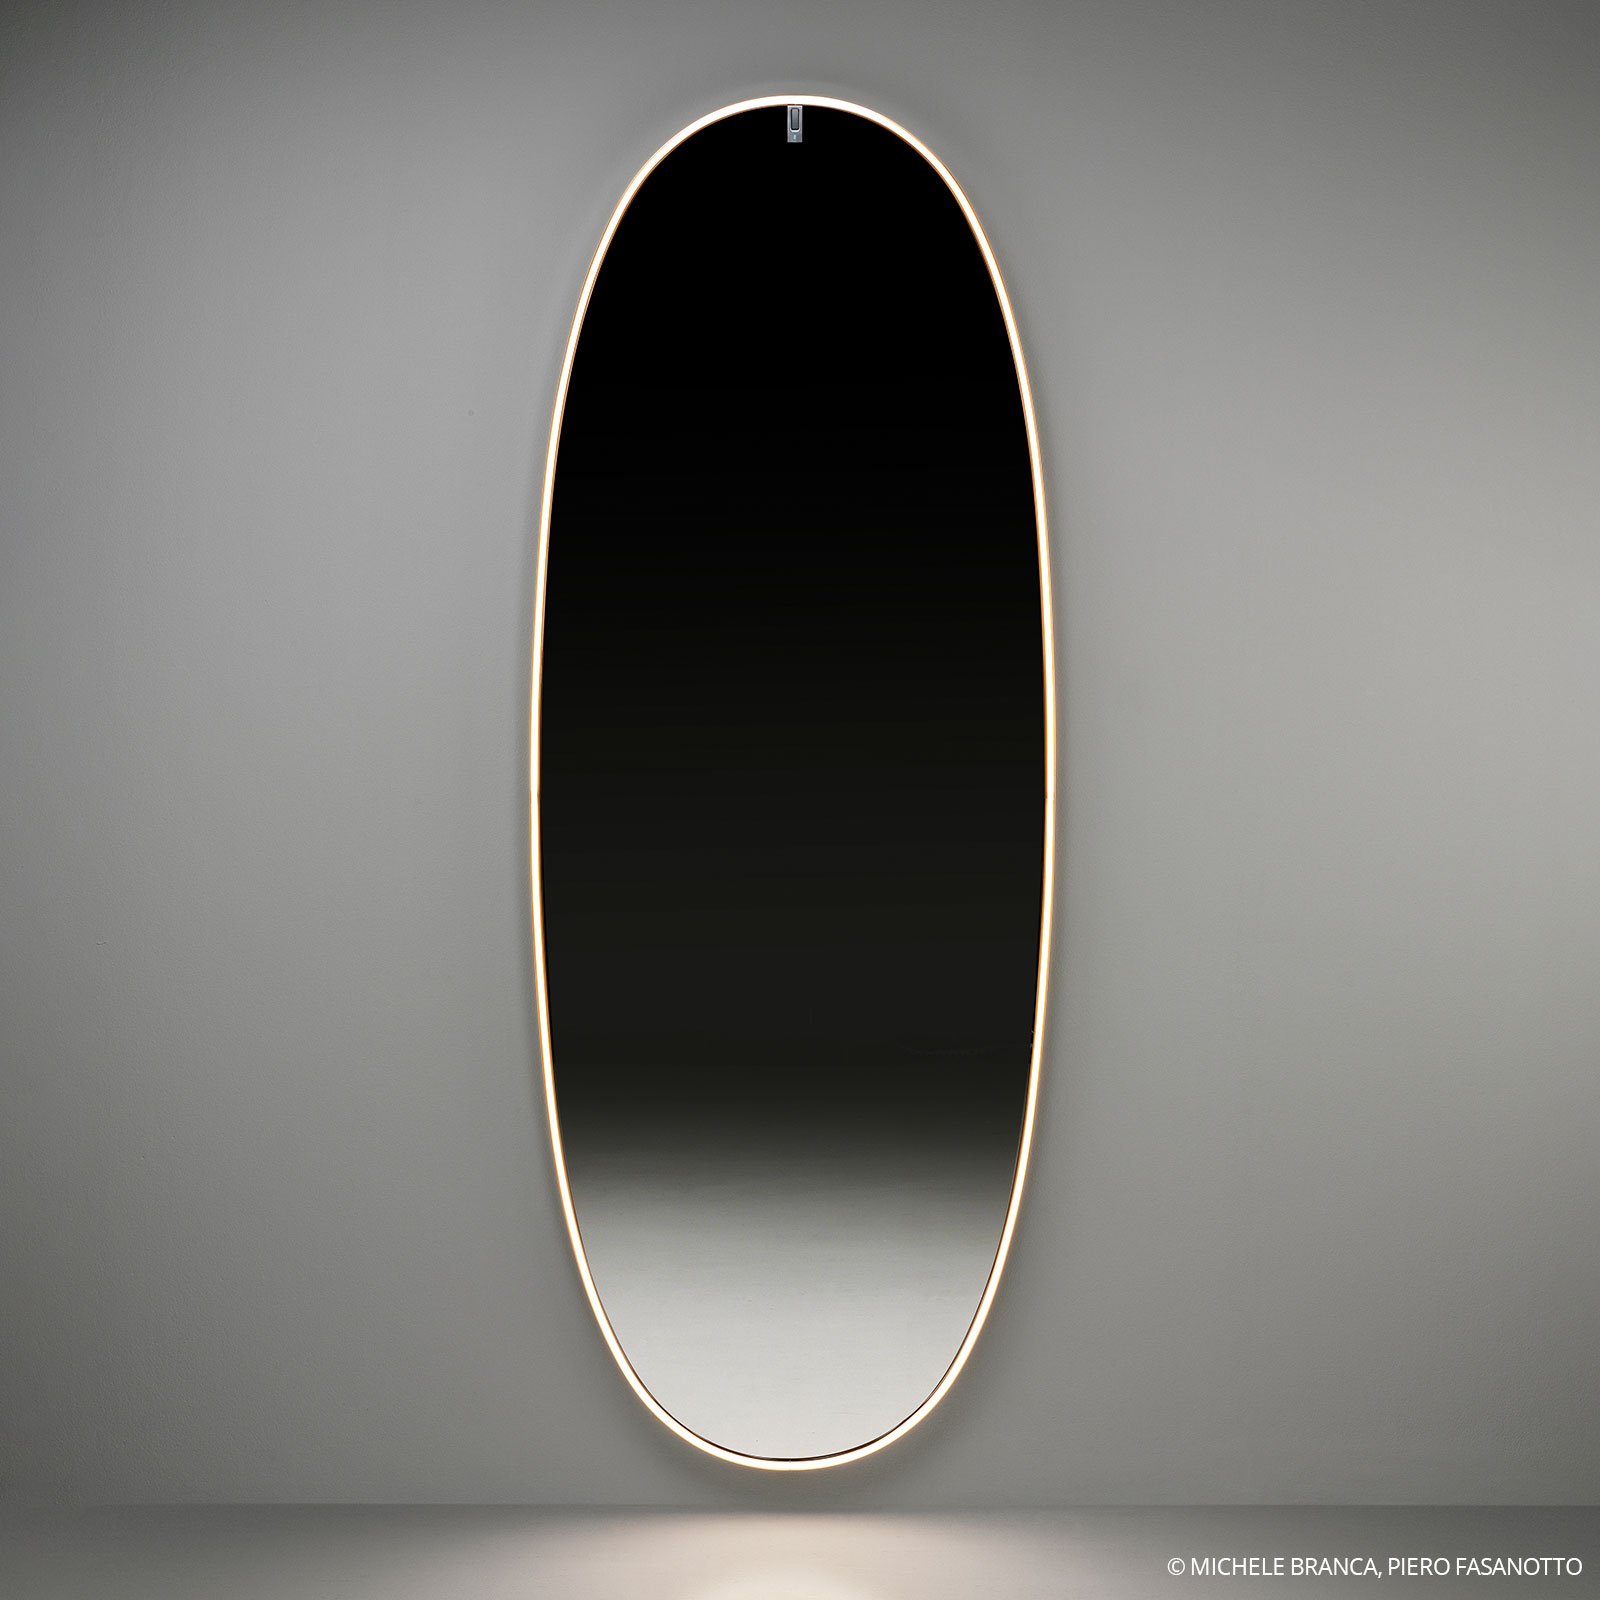 FLOS La Plus Belle LED wall mirror, bronze